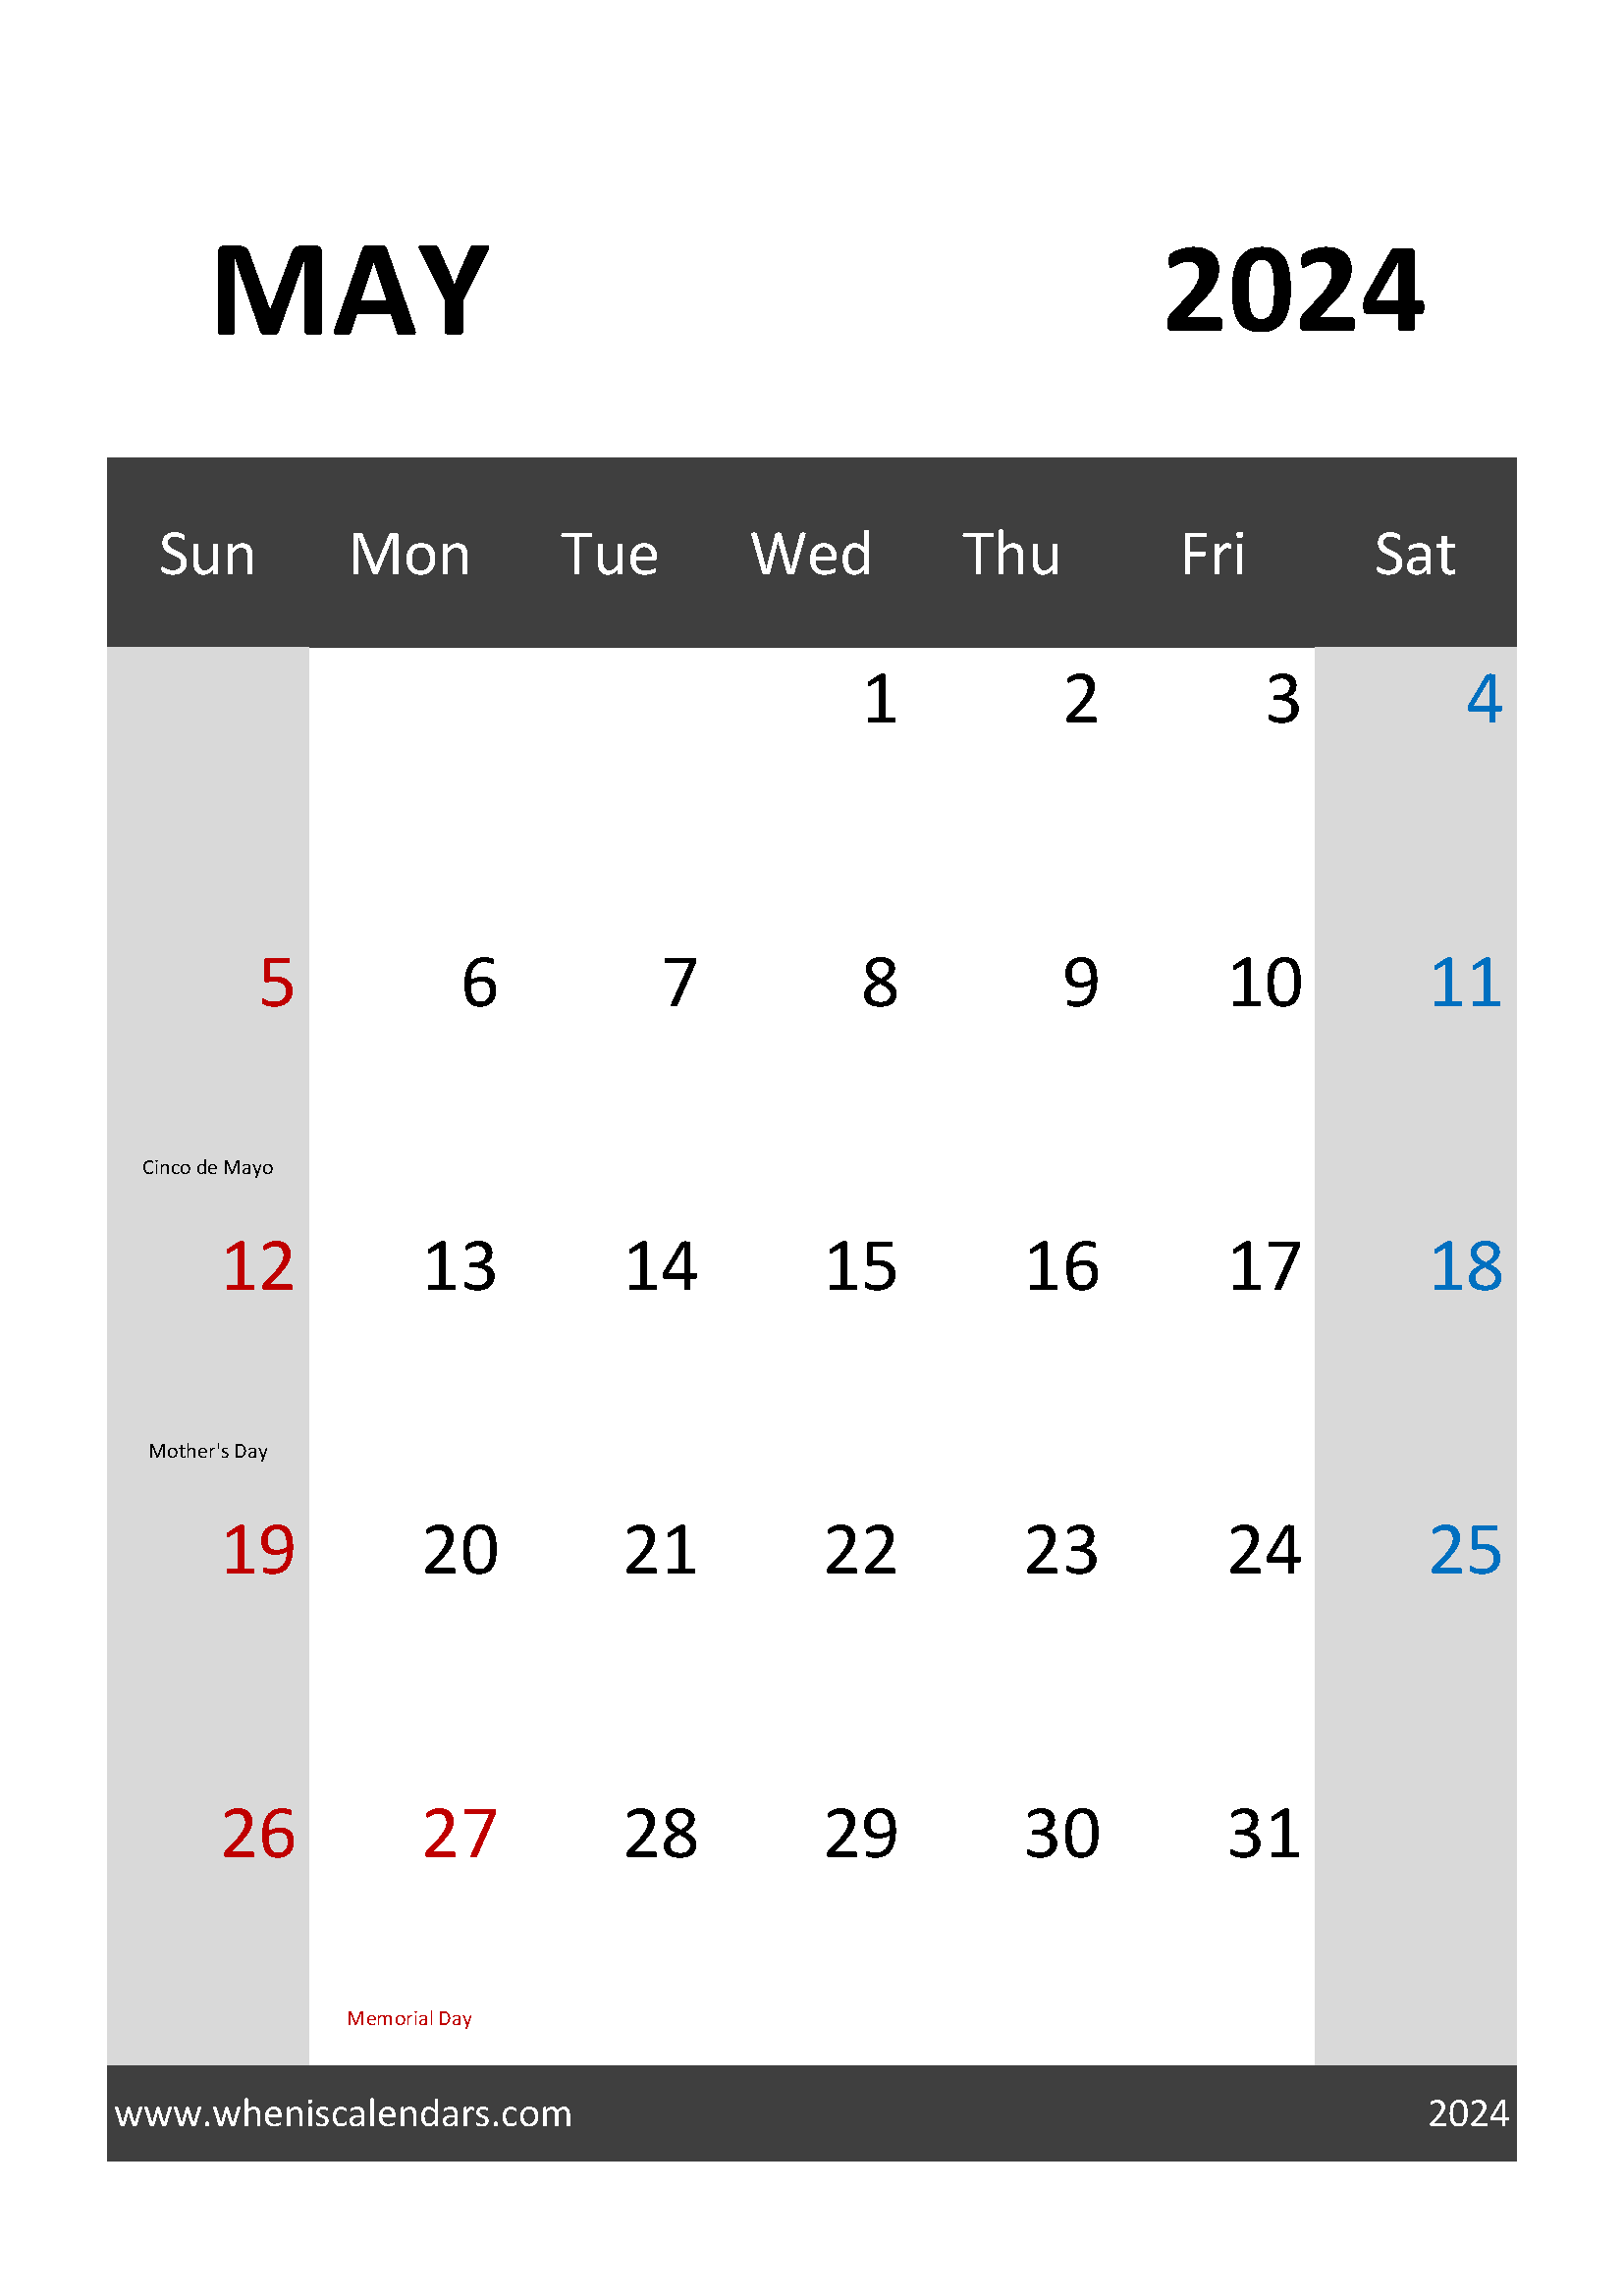 May 2024 Calendar planner Printable Monthly Calendar